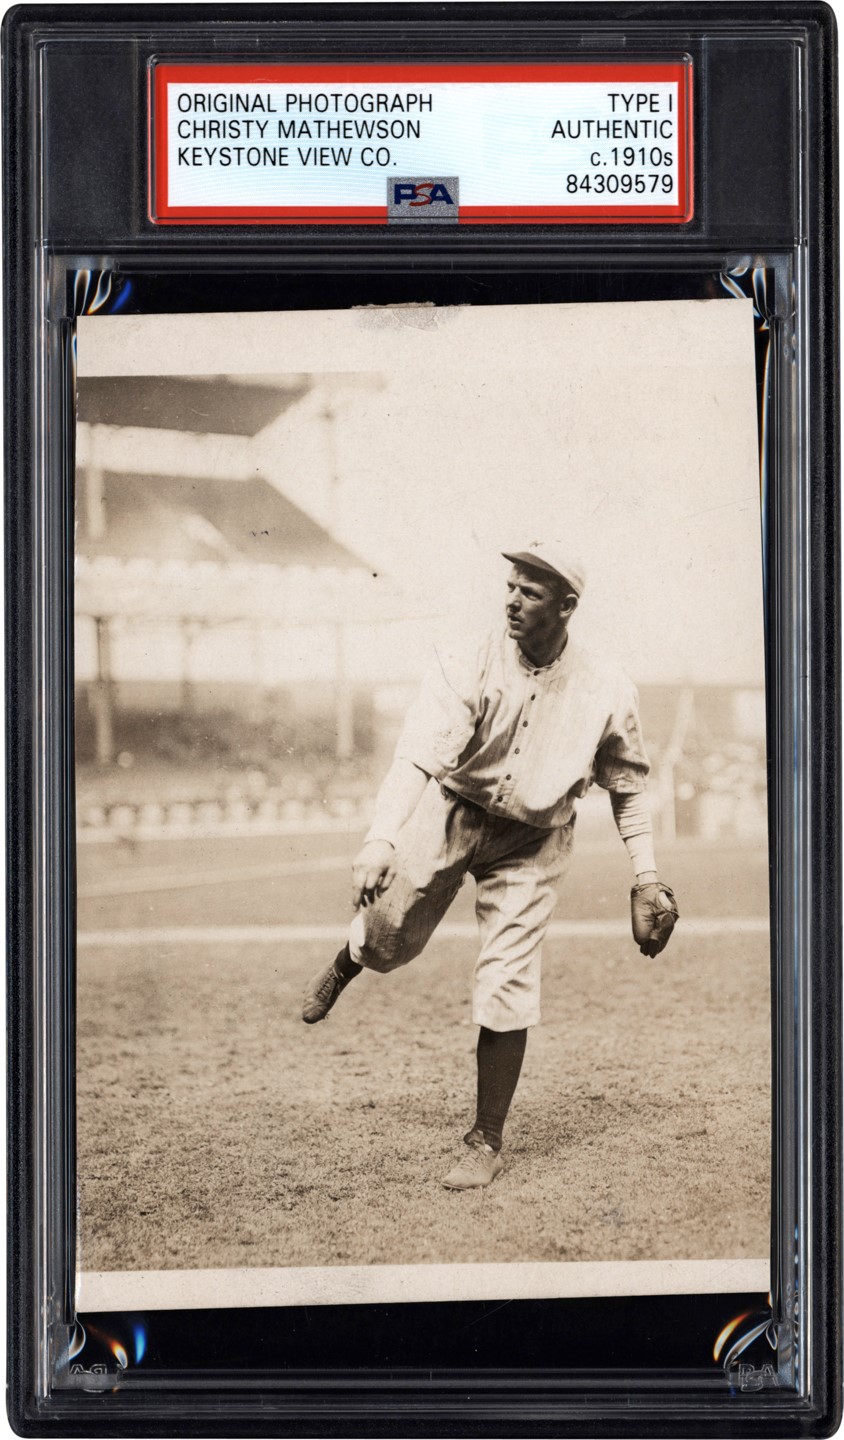 Vintage Sports Photographs - Early 1910s Christy Mathewson Keystone View Photograph (PSA Type I)